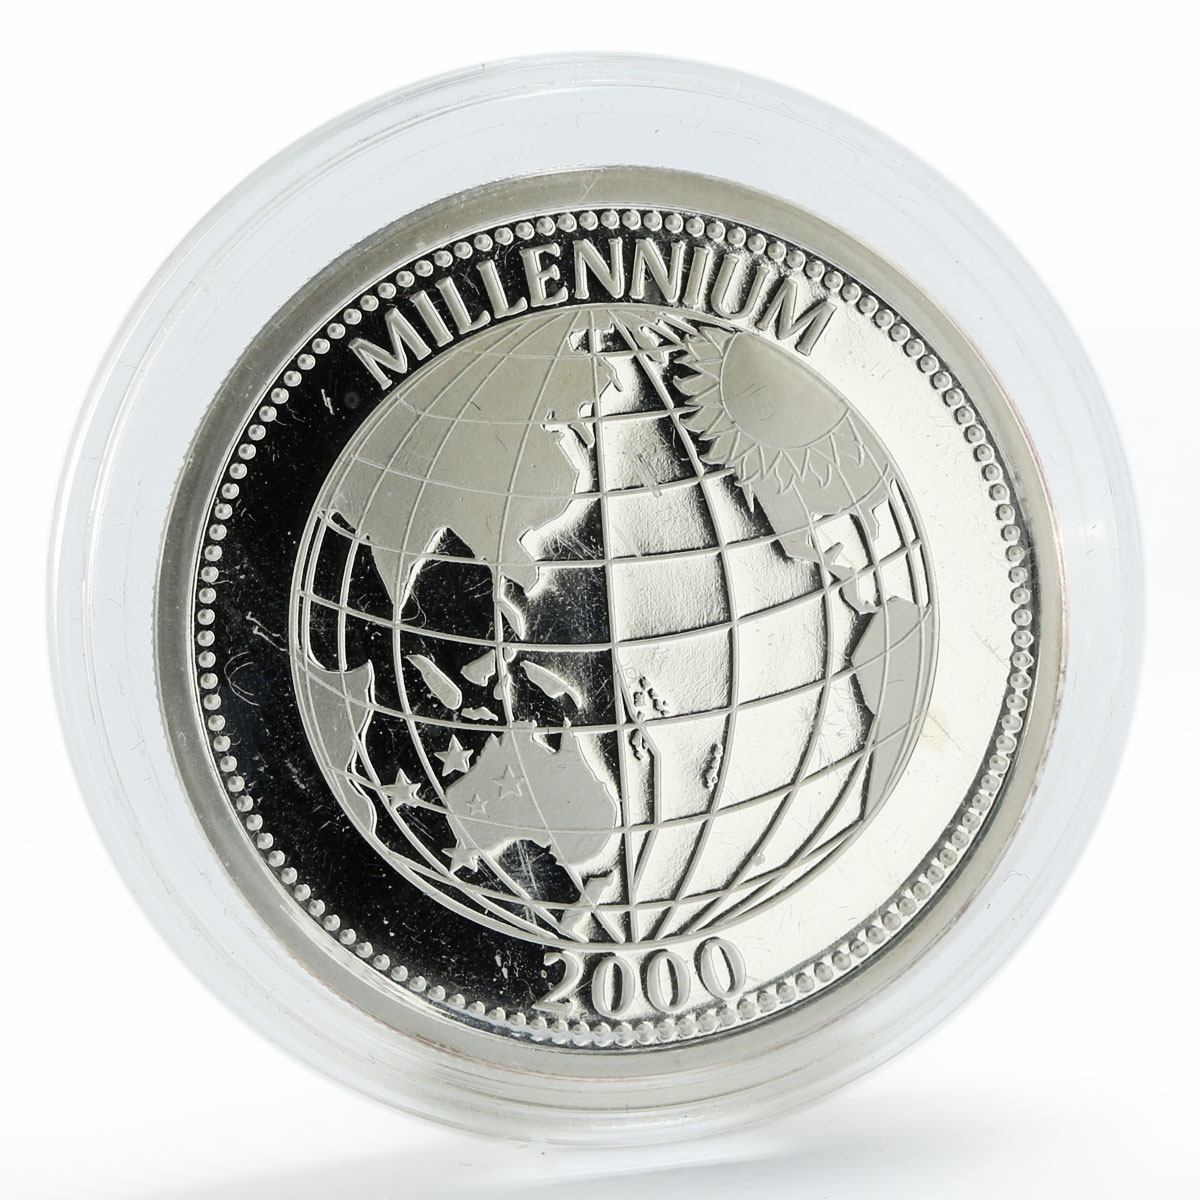 Somalia 150 shillings Millennium proof silver coin 2000